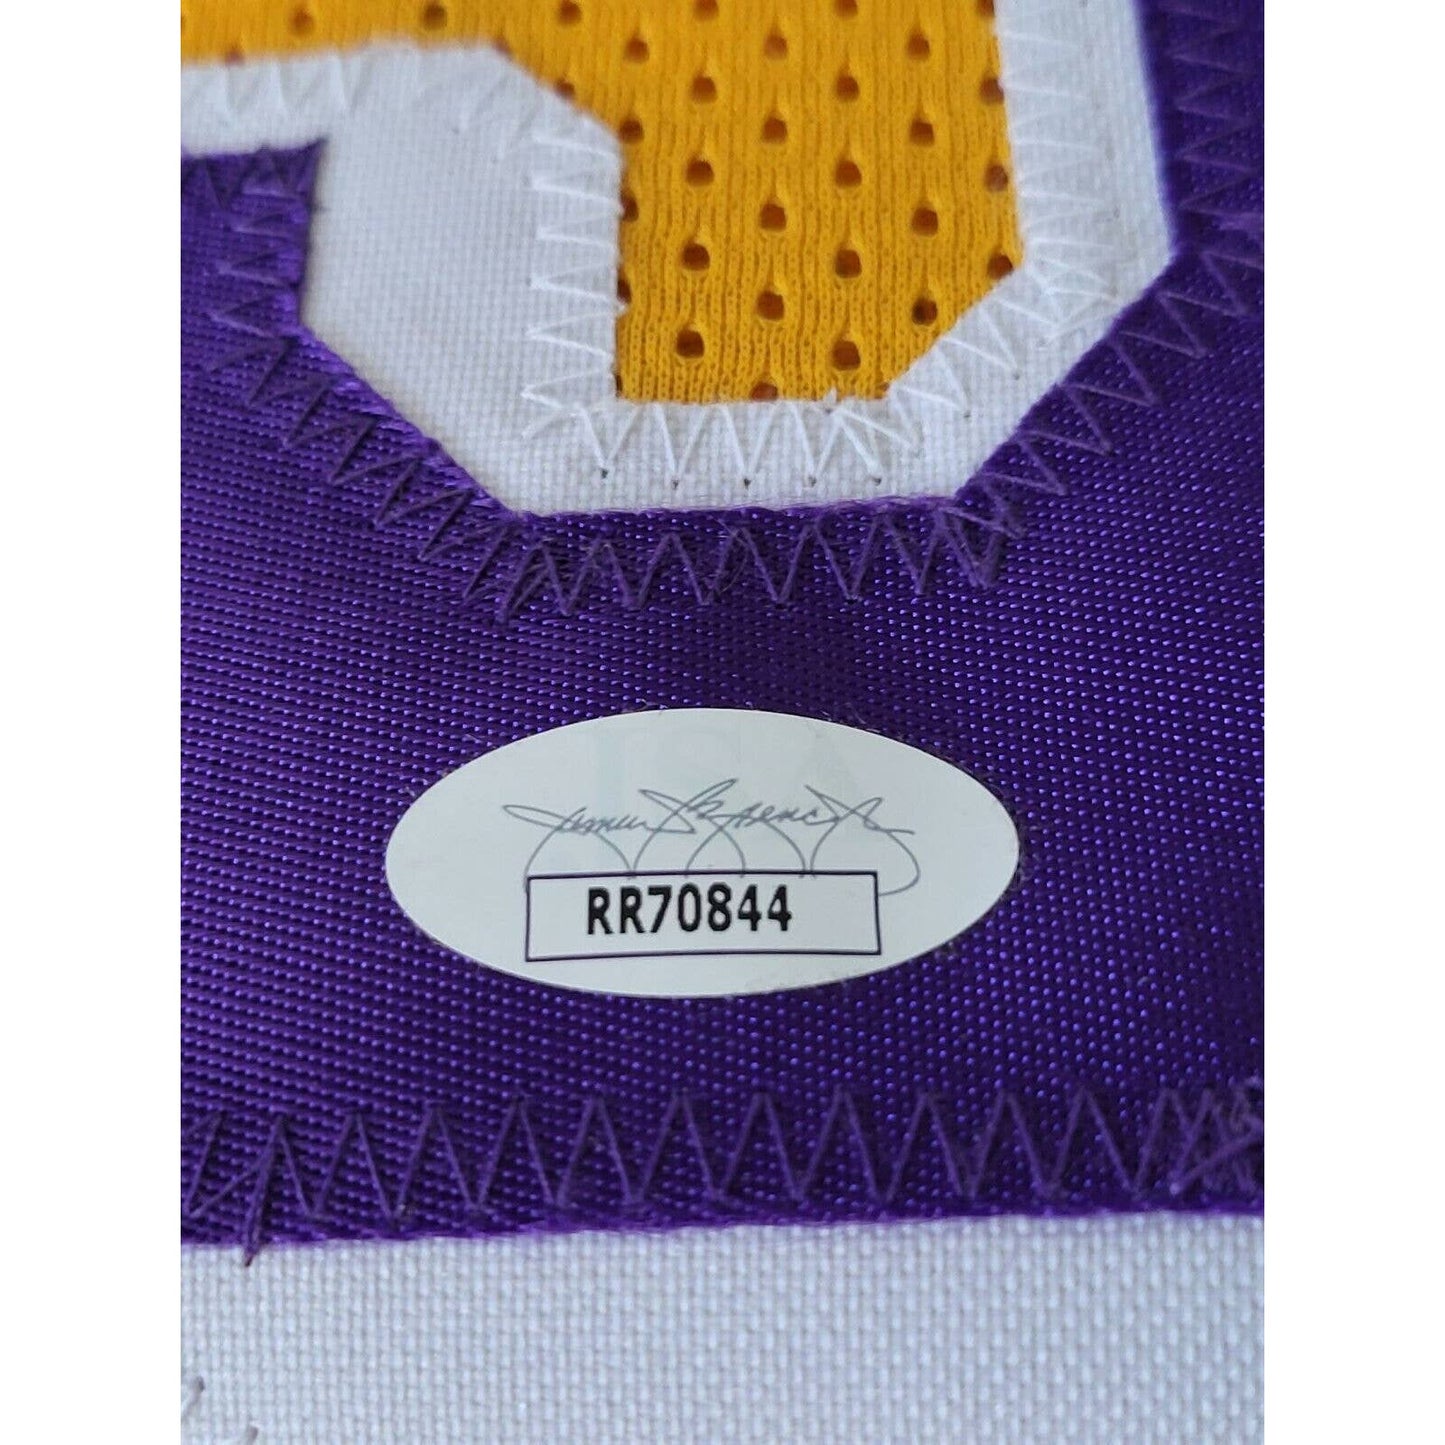 Nick Van Exel Autographed/Signed Jersey JSA COA Los Angeles Lakers LA - TreasuresEvolved